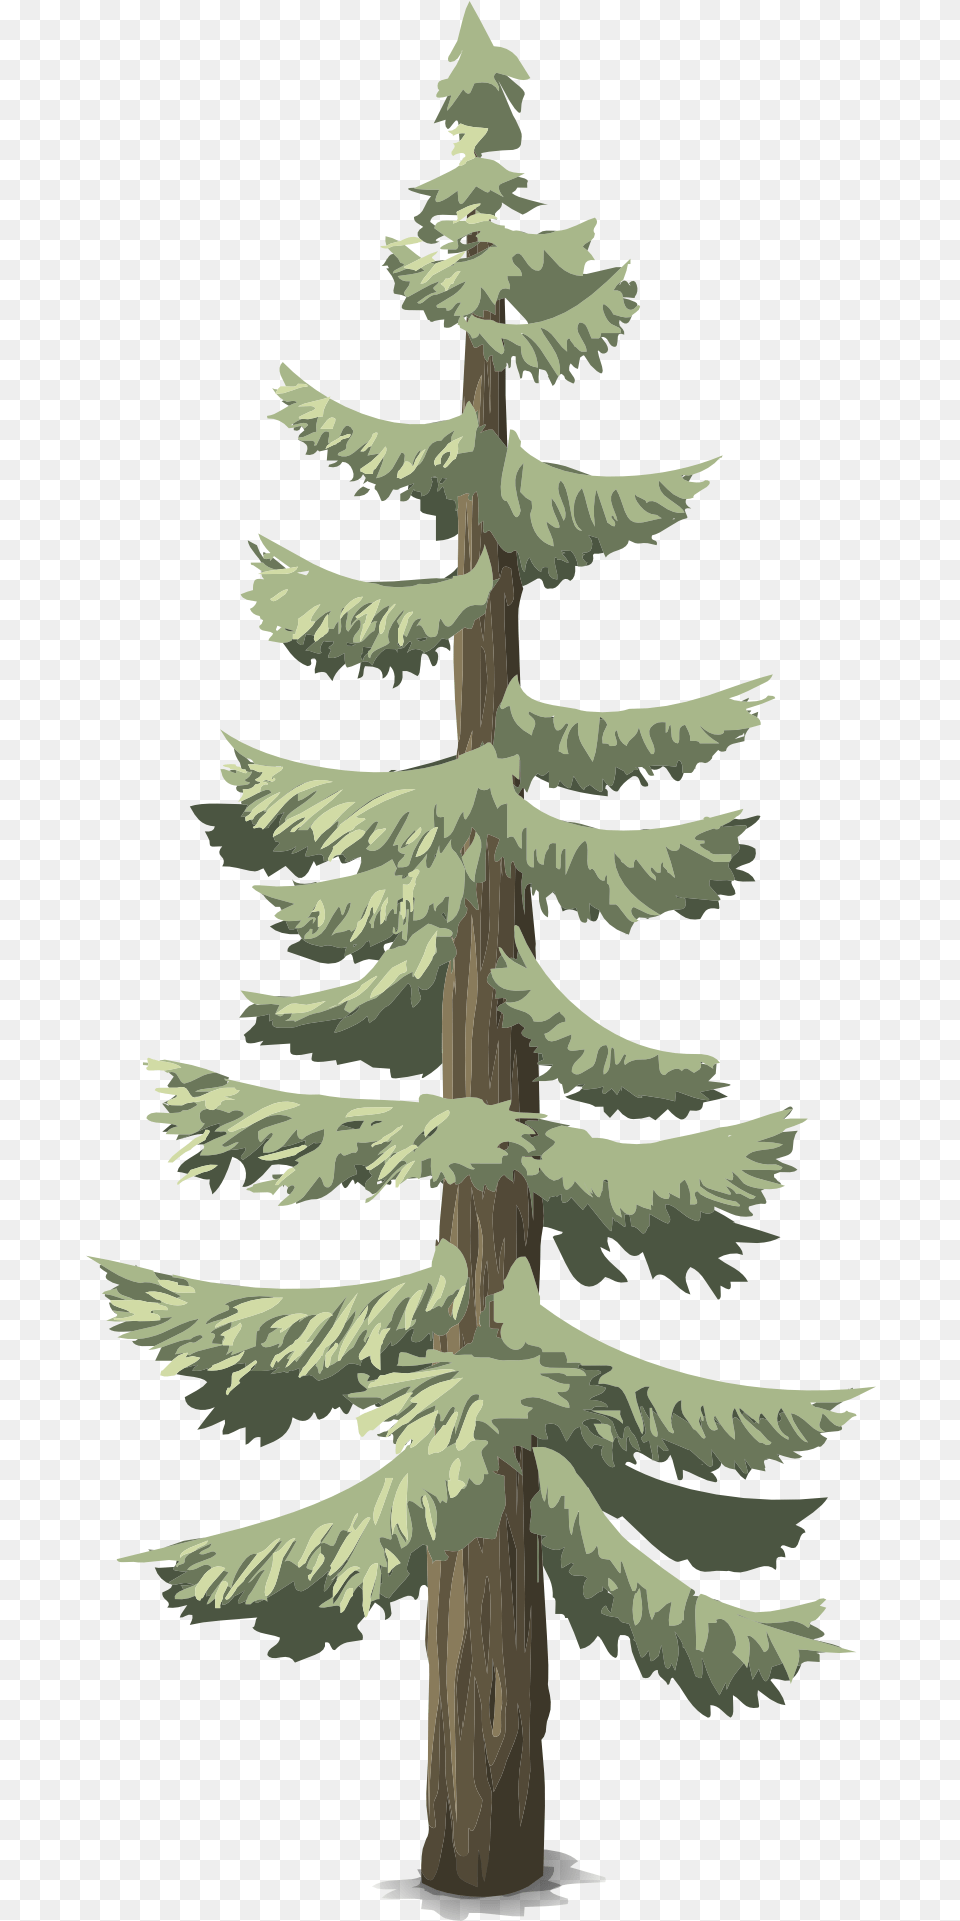 Pines Conifer Trees Tall Woods Arbol De Bosque, Fir, Pine, Plant, Tree Free Transparent Png